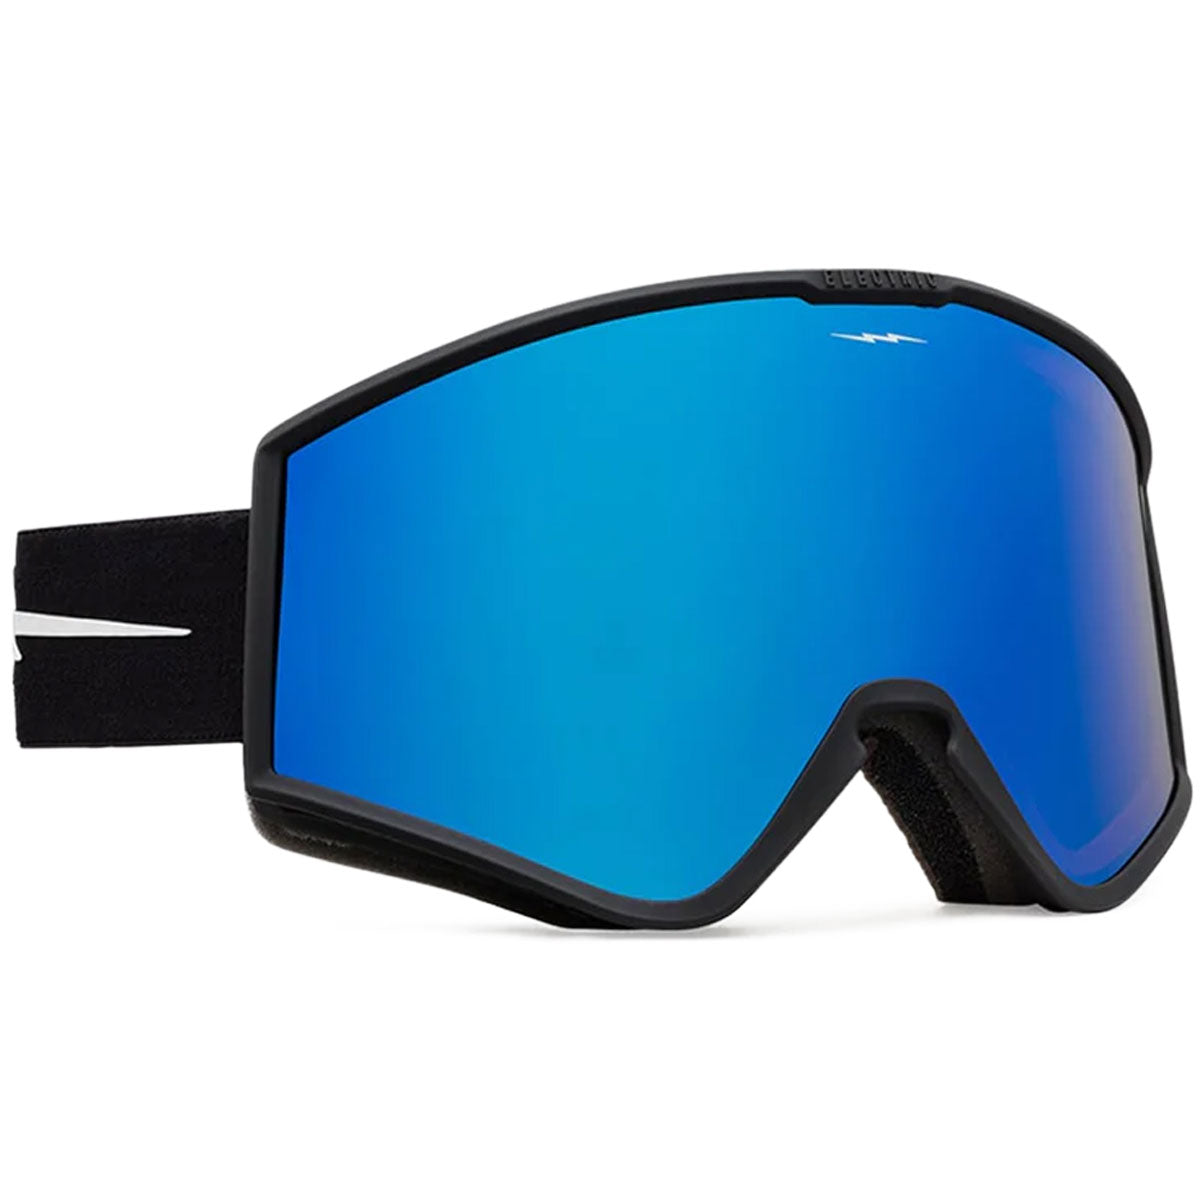 Electric Kleveland Snowboard Goggles - Matte Black/Blue Chrome image 1